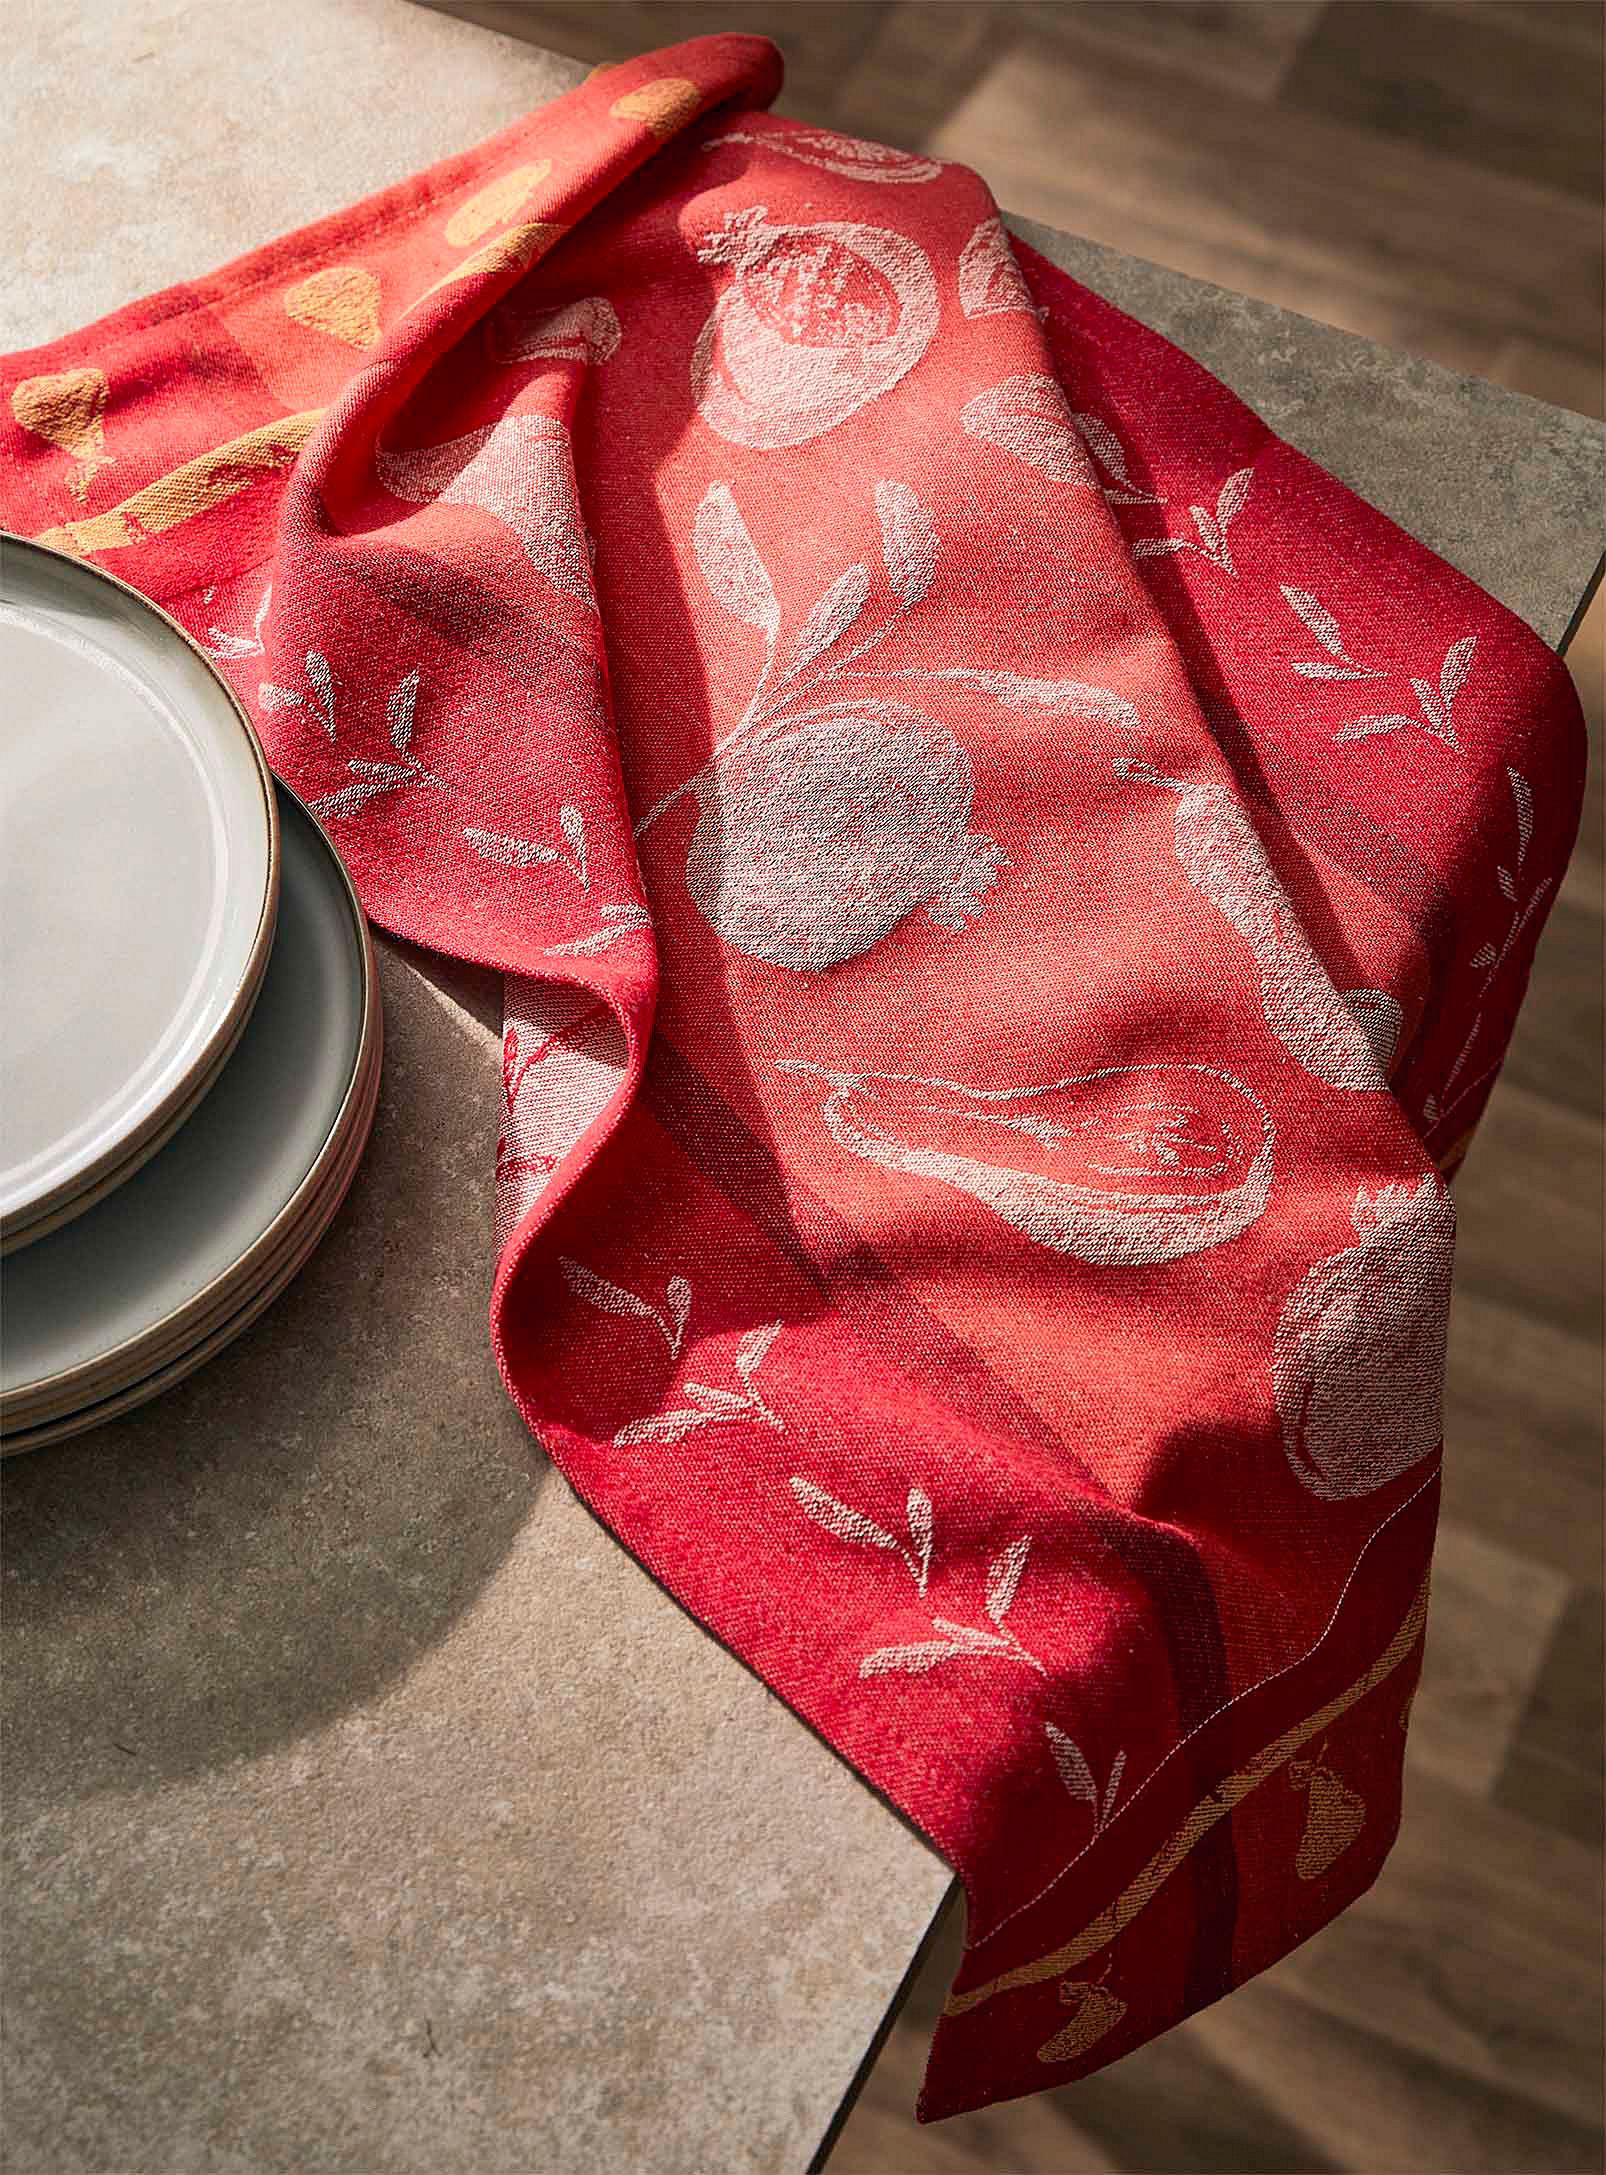 Danica Orchard Harvest Jacquard Tea Towel In Patterned Red